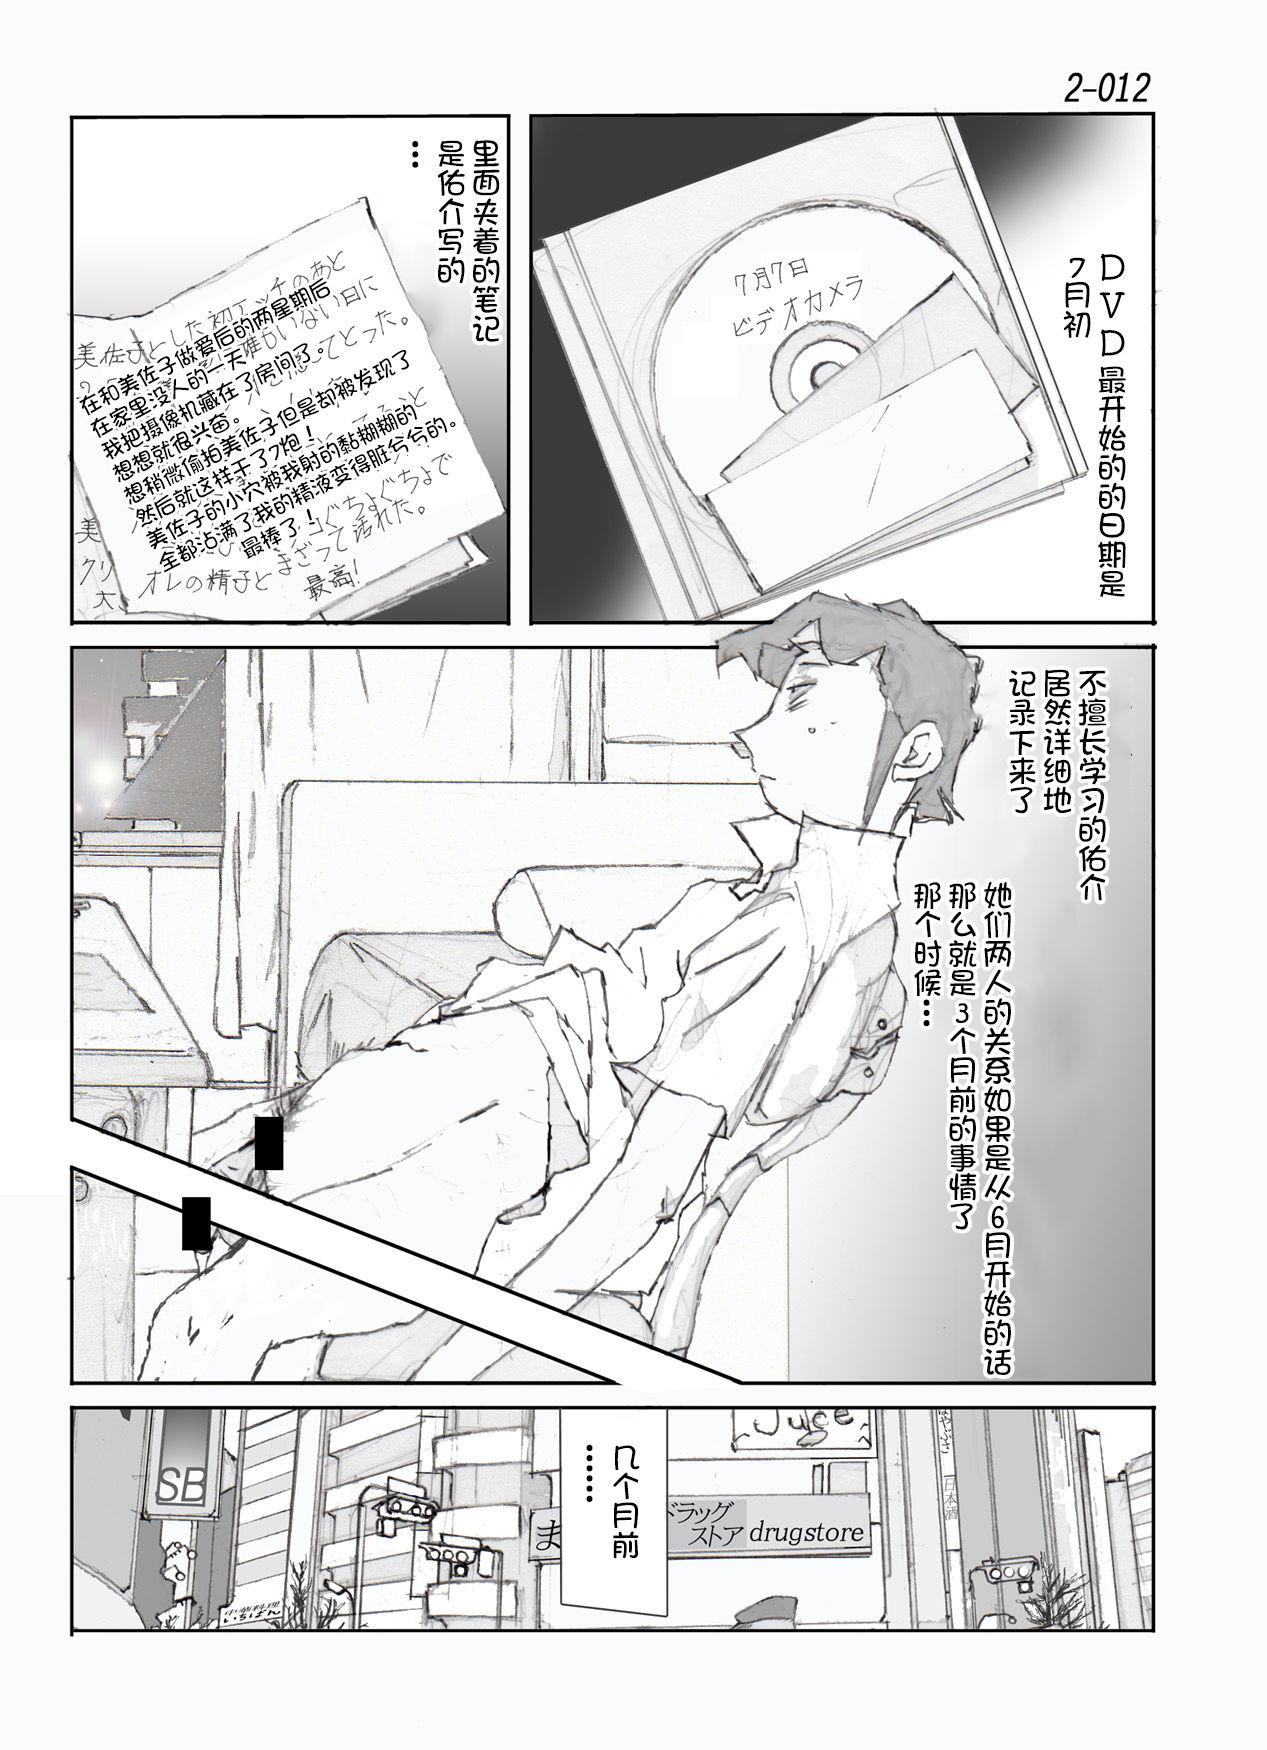 Novinhas Kamo no Aji - Misako 2 - Original Young Old - Page 13